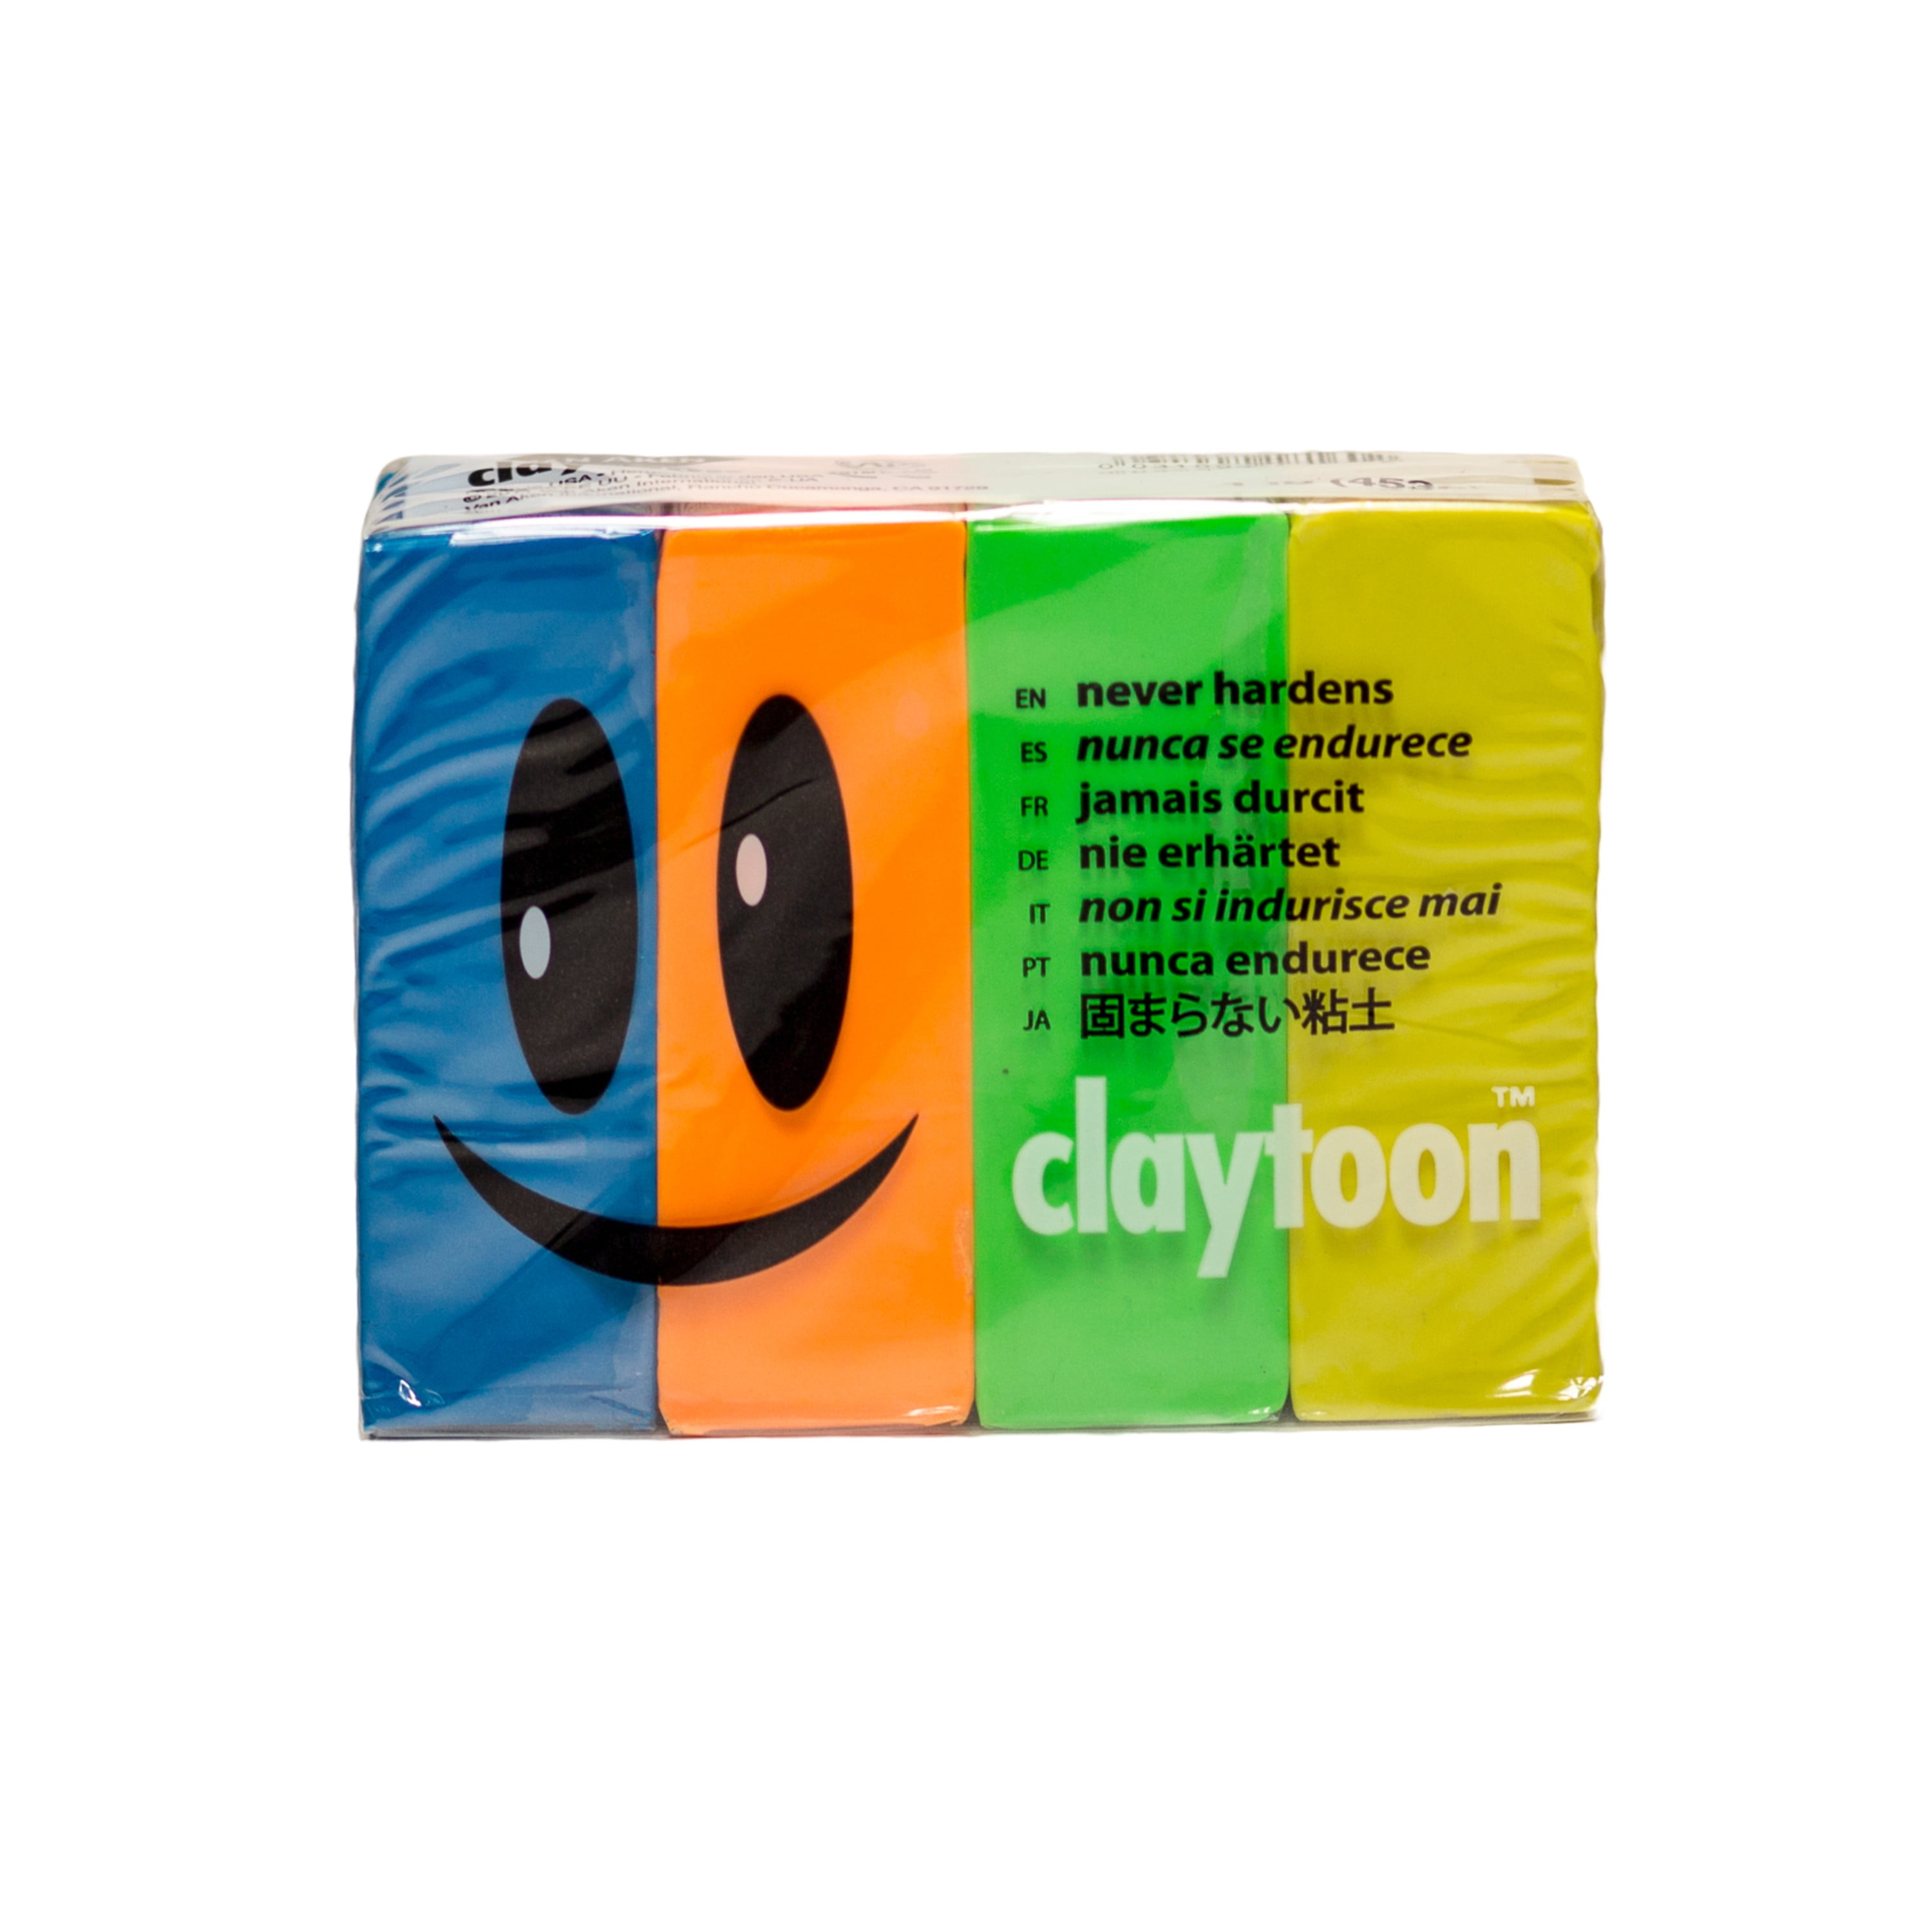 claytoon clay